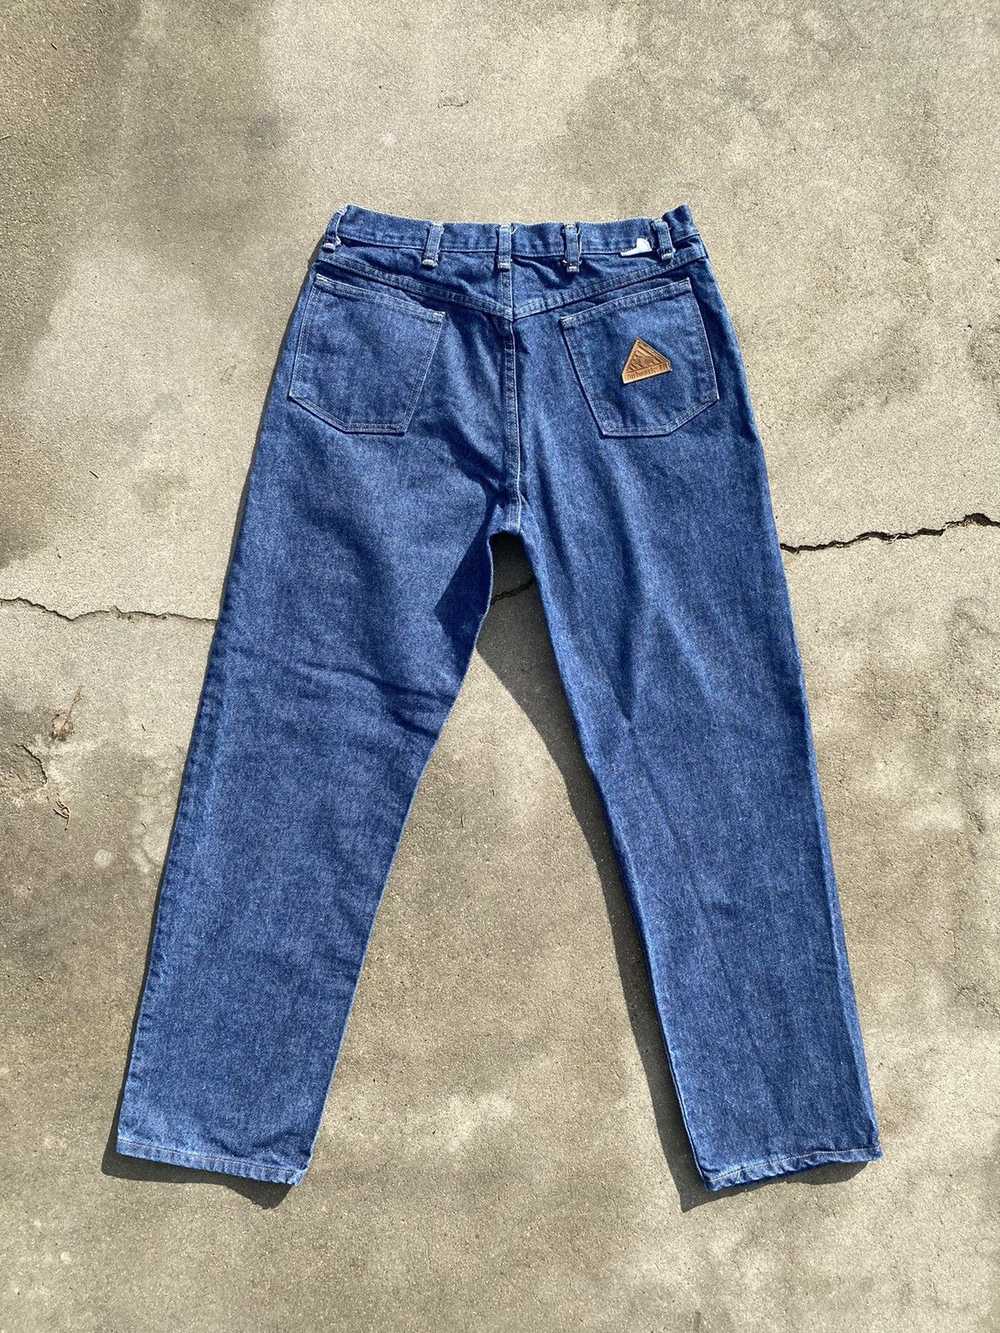 Japanese Brand × Vintage Vintage workwear jeans - image 7